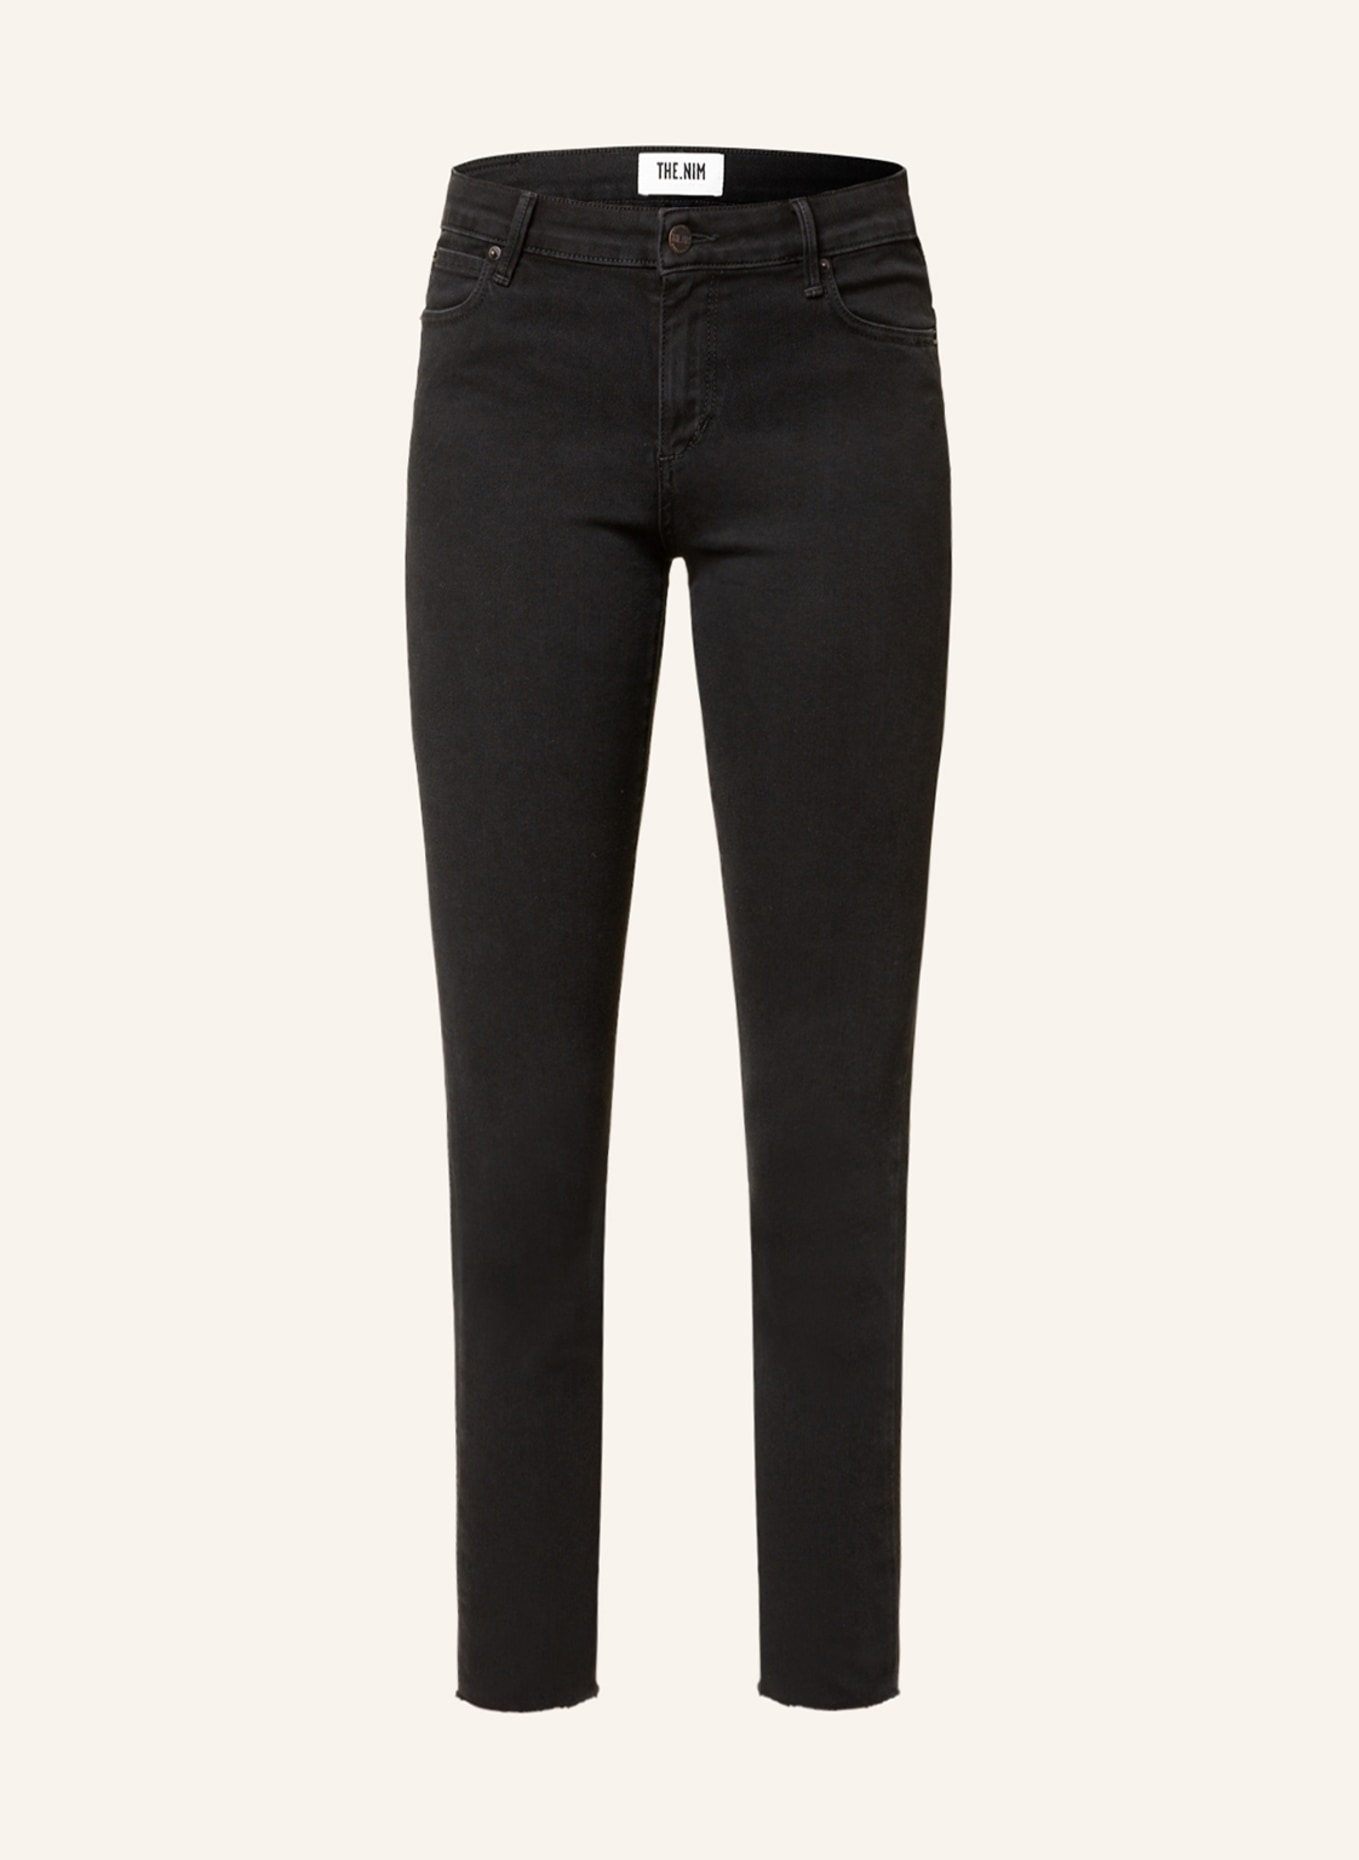 THE.NIM STANDARD 7/8-Jeans HOLLY, Farbe: W206-BLK Black (Bild 1)